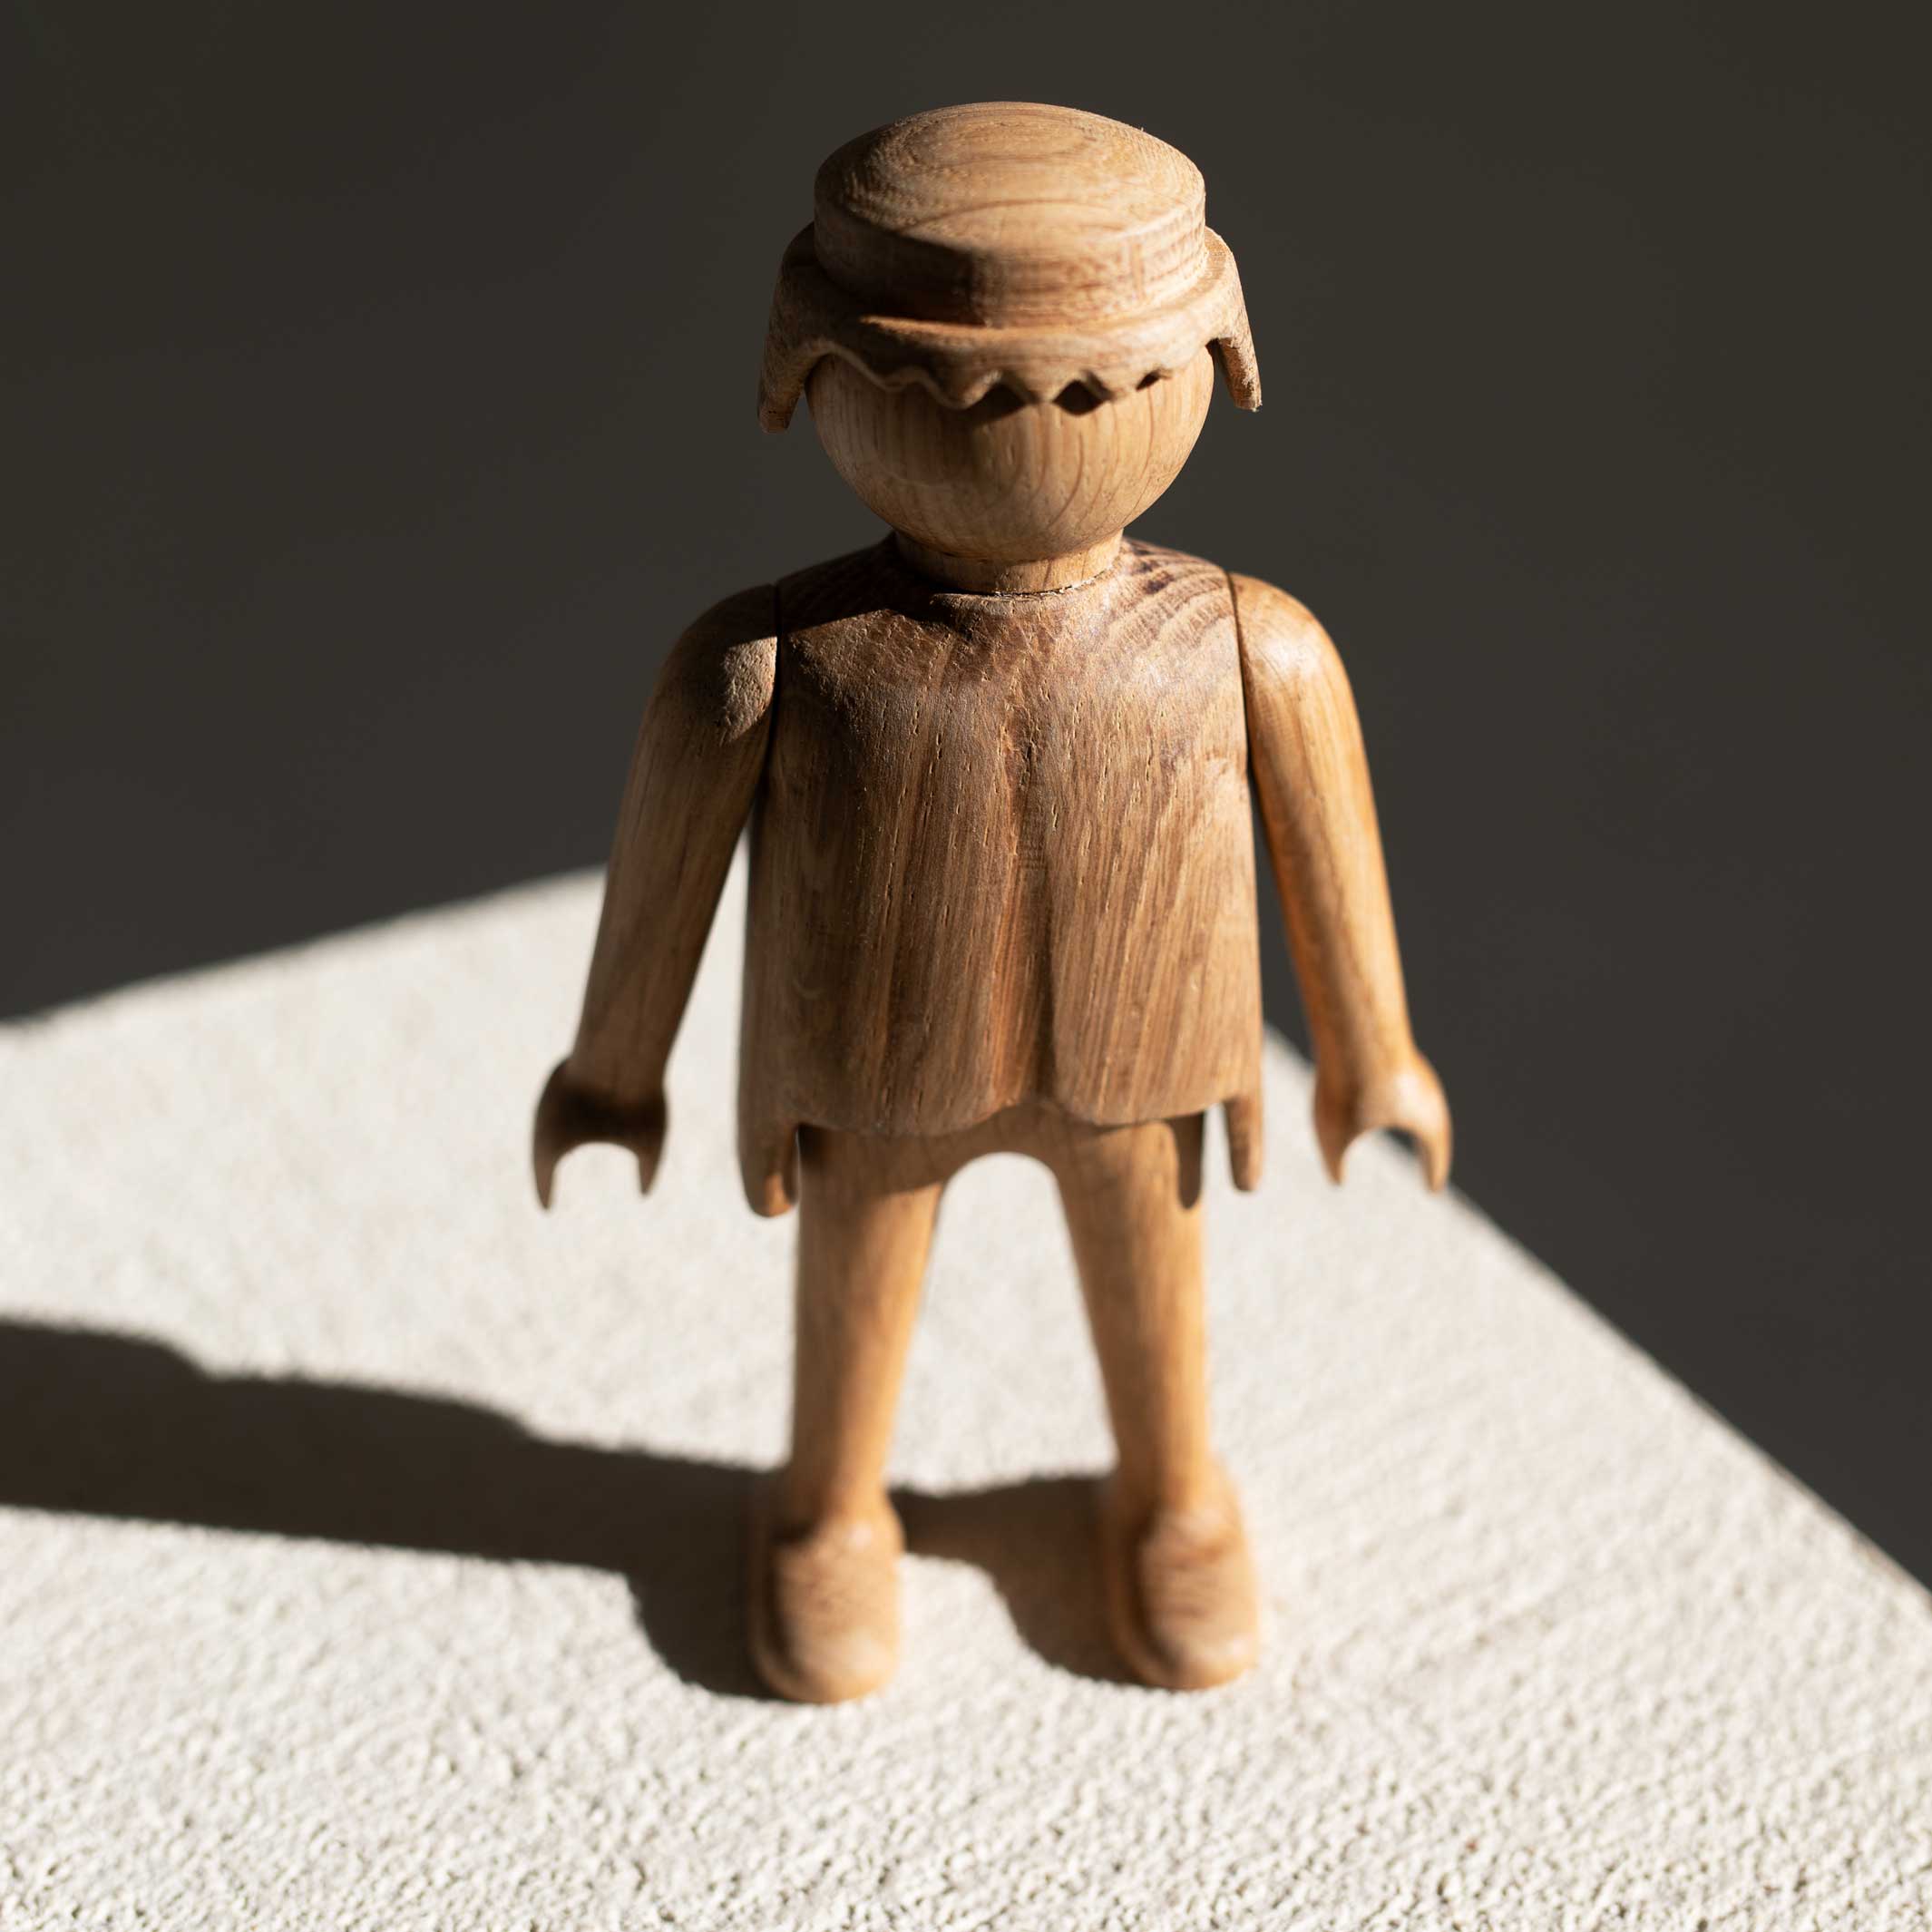 PLAYMOBIL | Wooden FIGURINE | Oak 17 cm high | Jakob Burgsø | boyhood